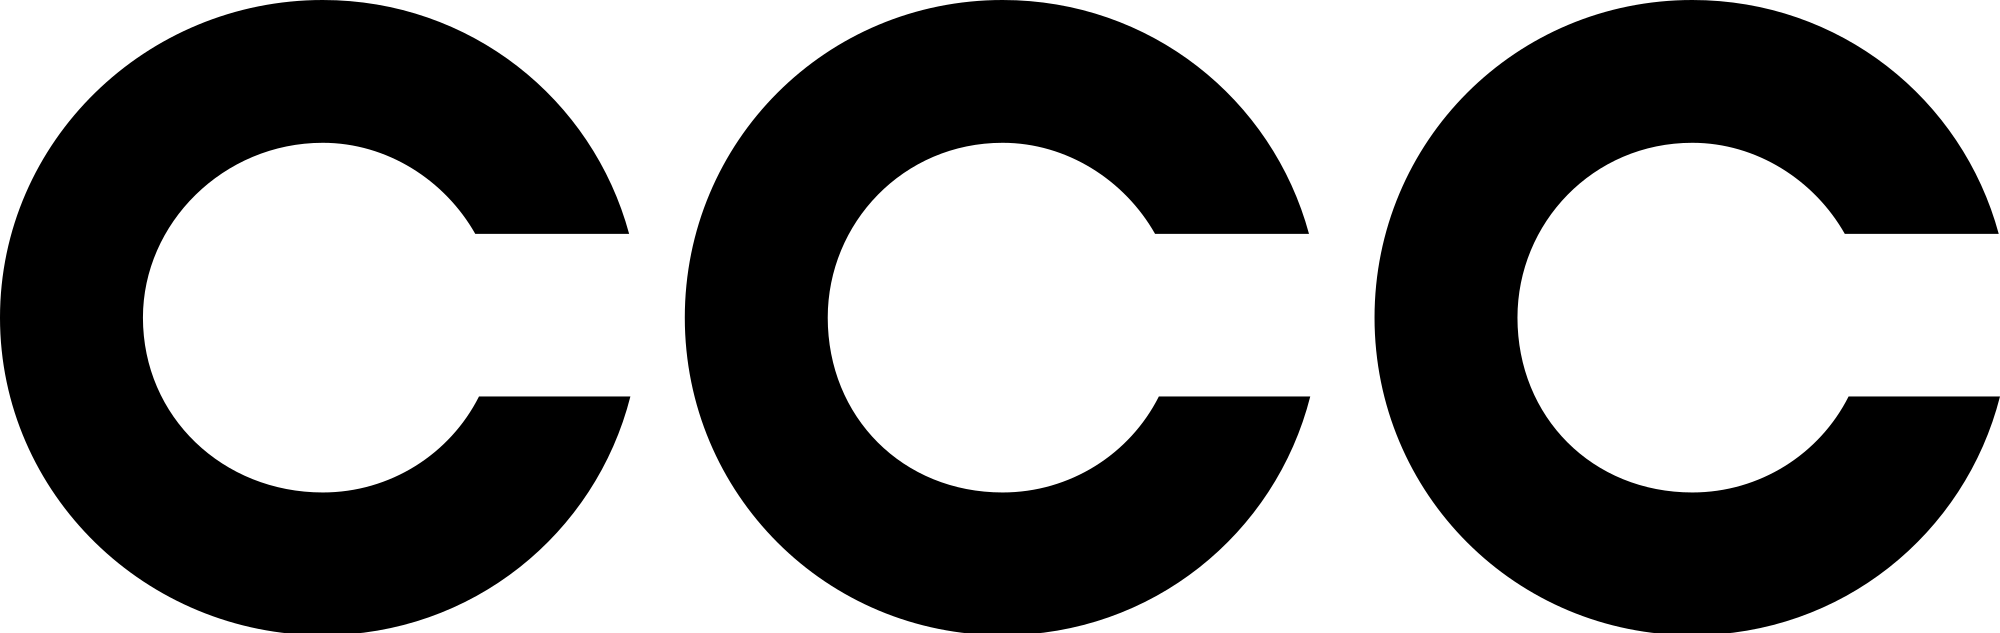 CCC Logo - File:Culture Convenience Club (CCC) logo.svg - Wikimedia Commons